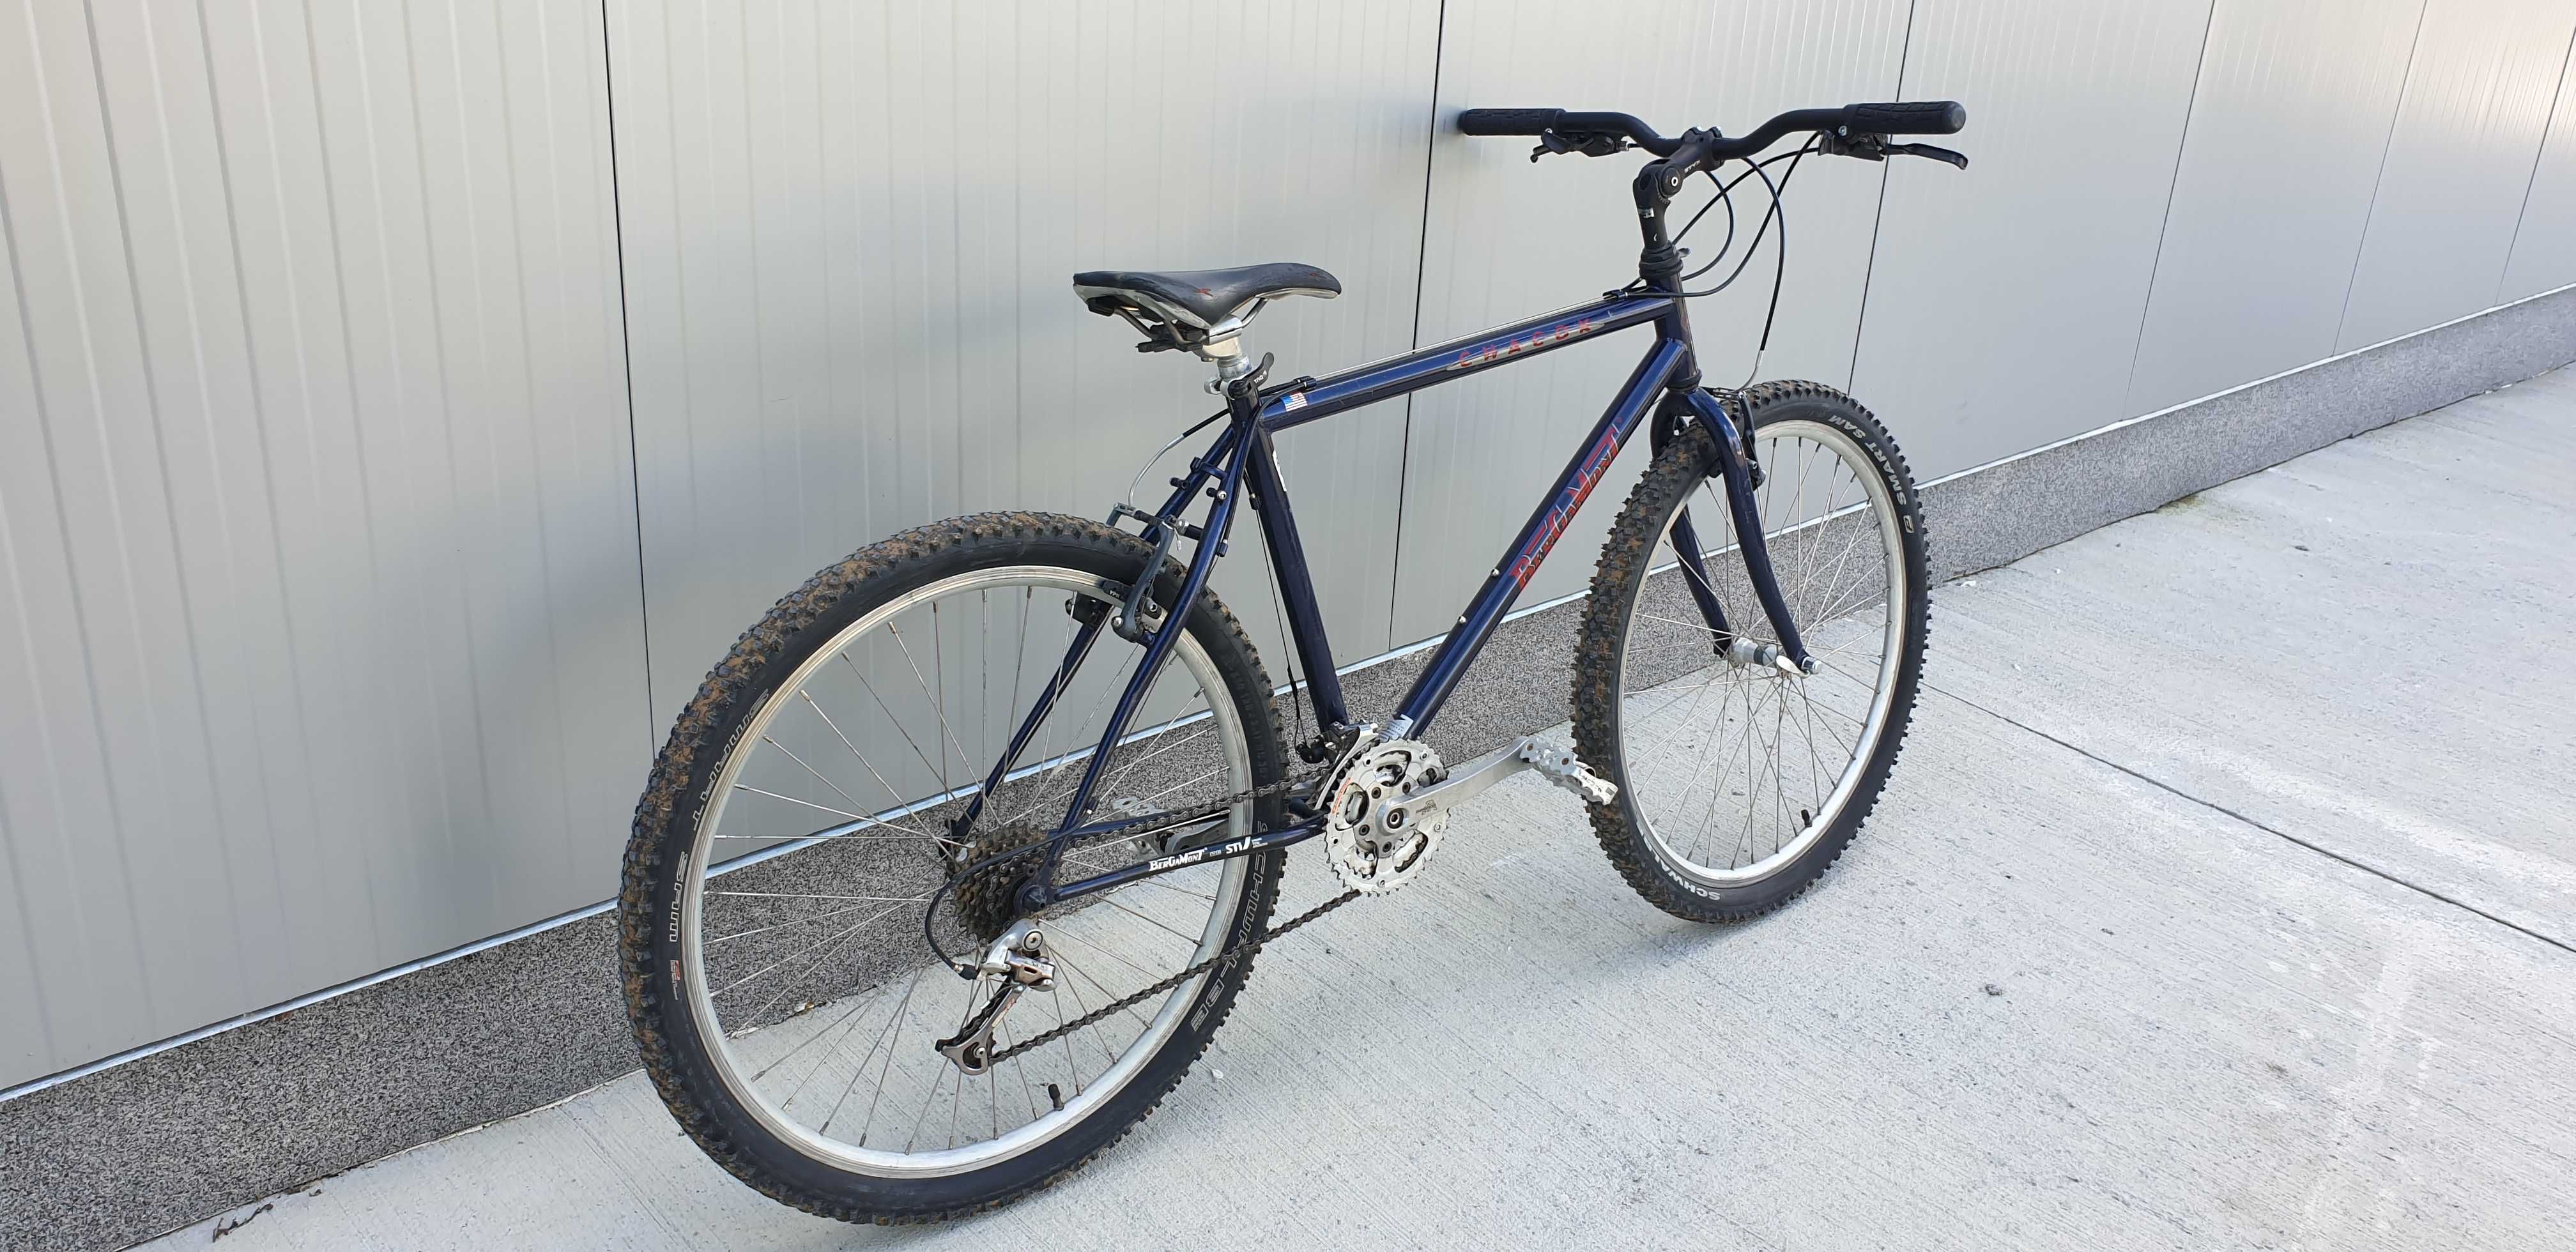 Хром-молбденов велосипед Bergamont колело 26"